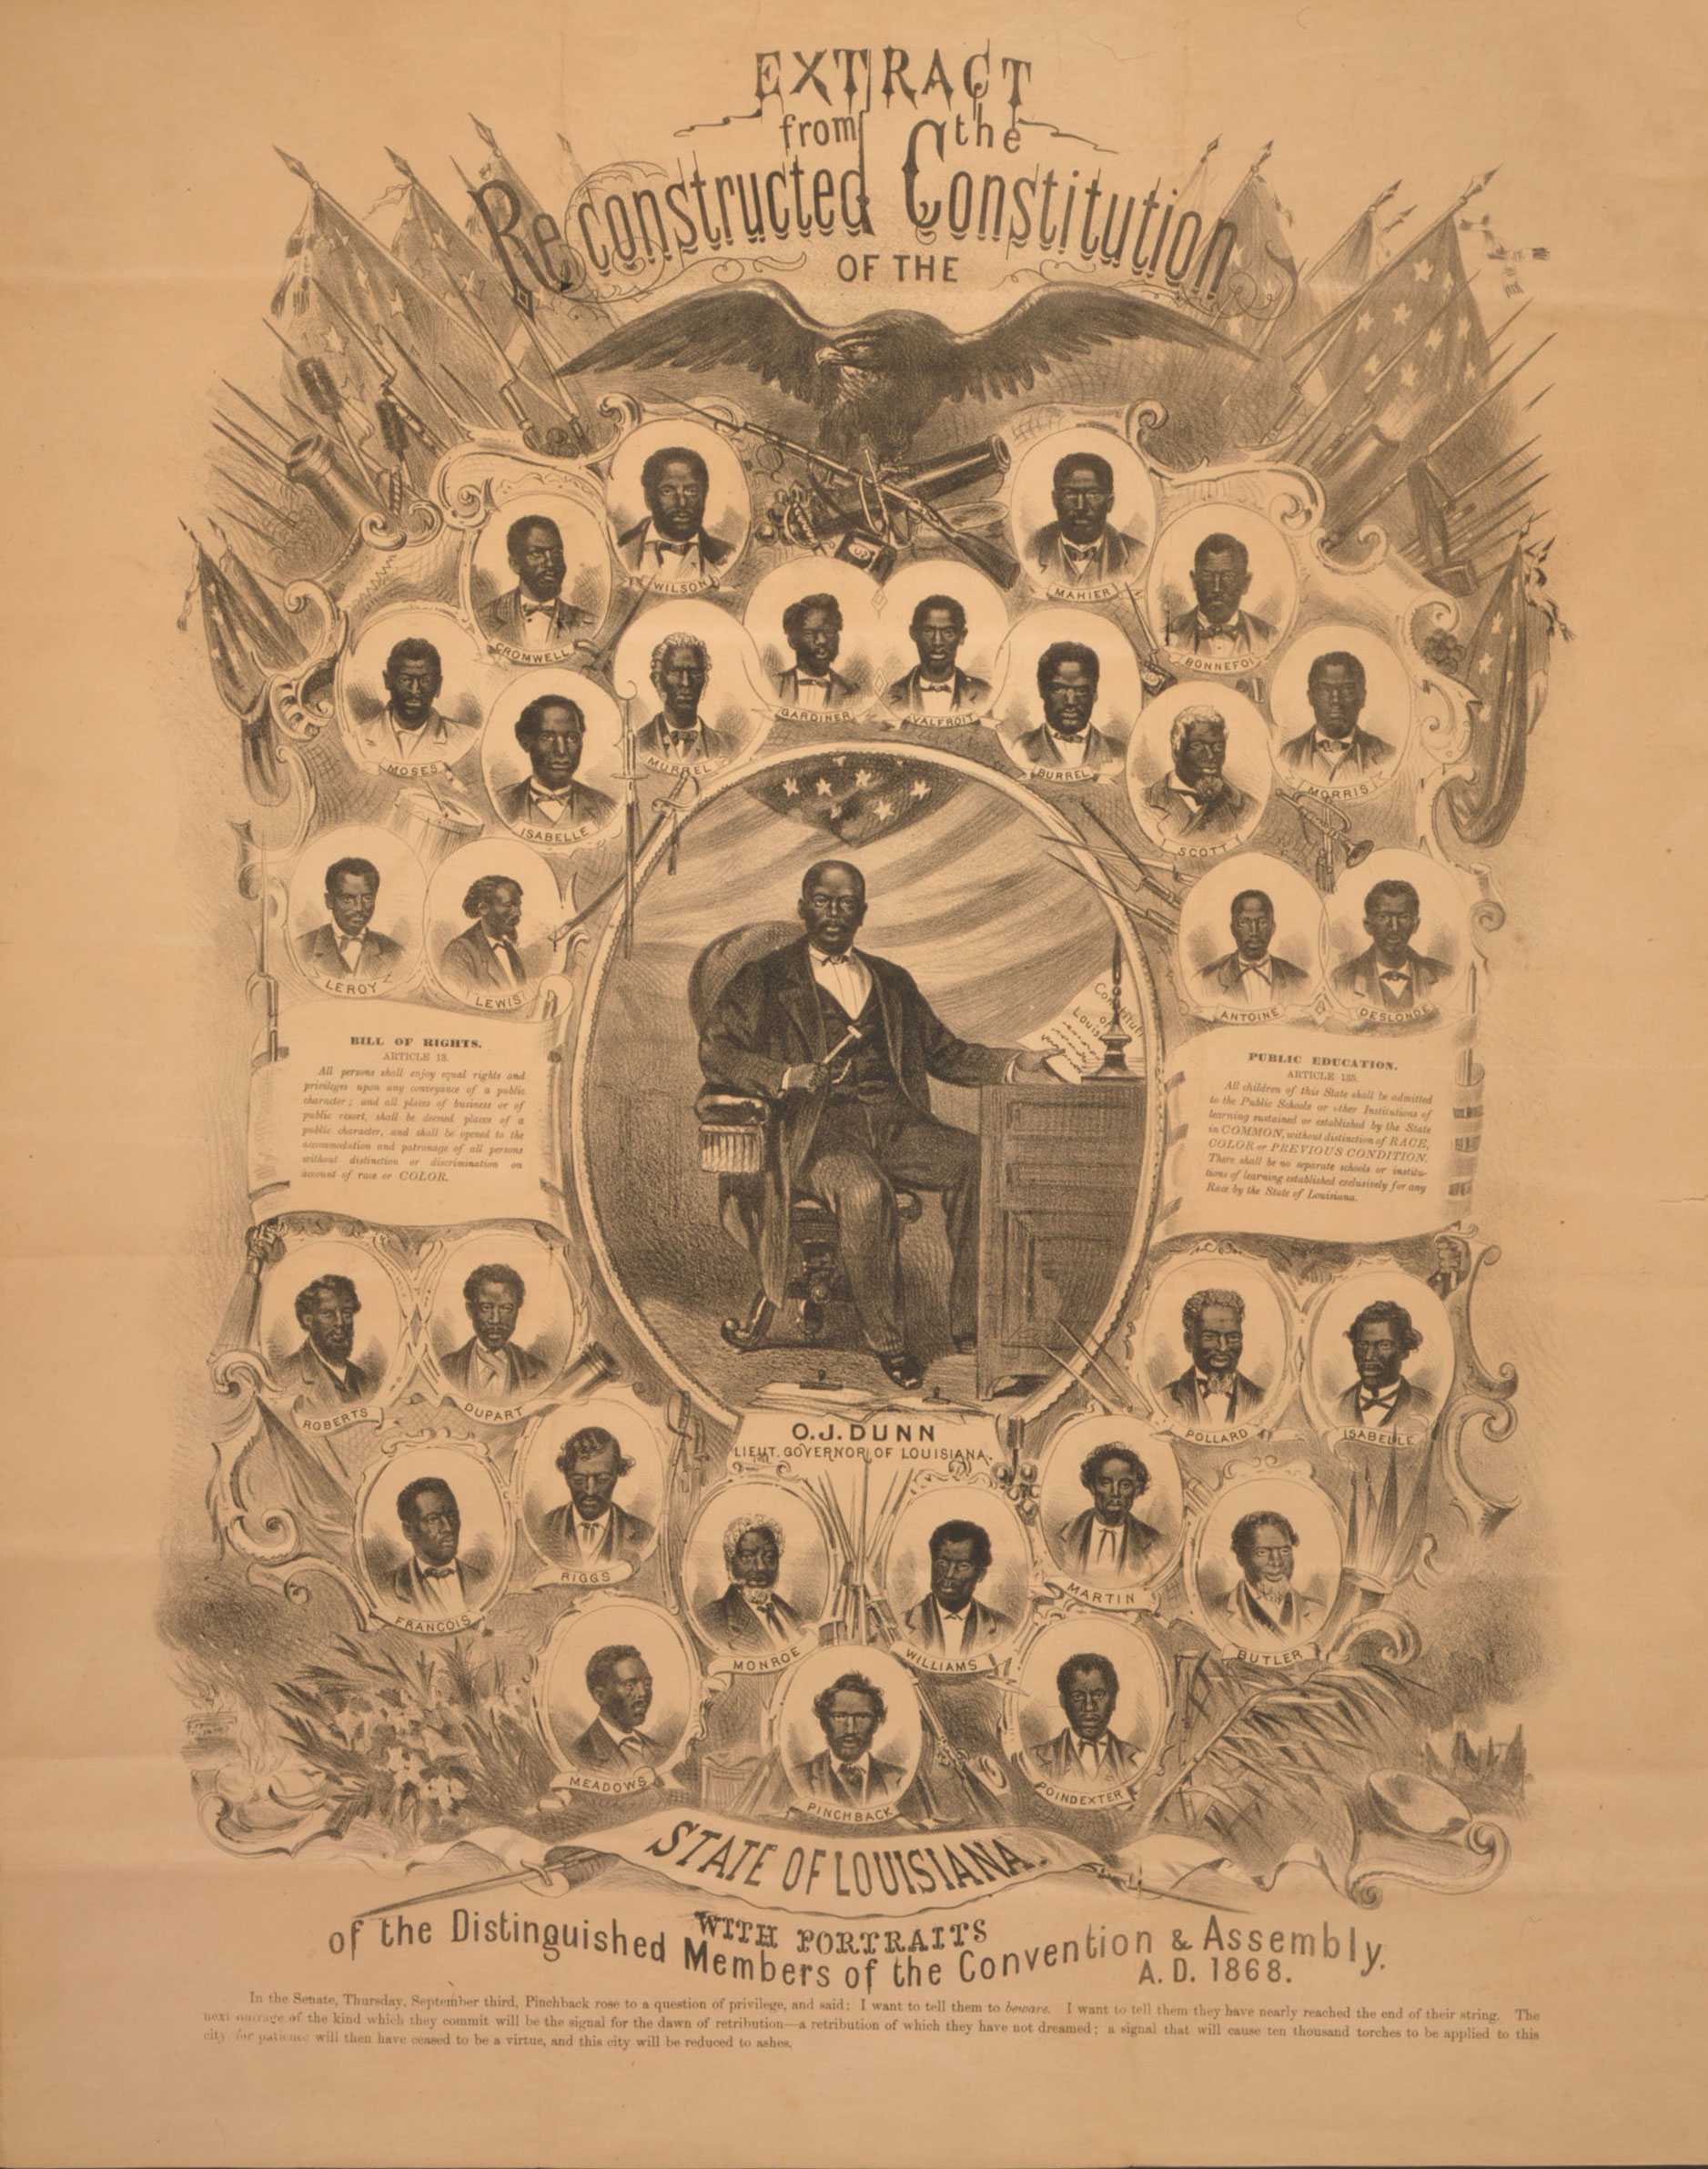 Portrait with African American delegates surround the central portrait of Lt. Gov. Oscar J. Dunn.